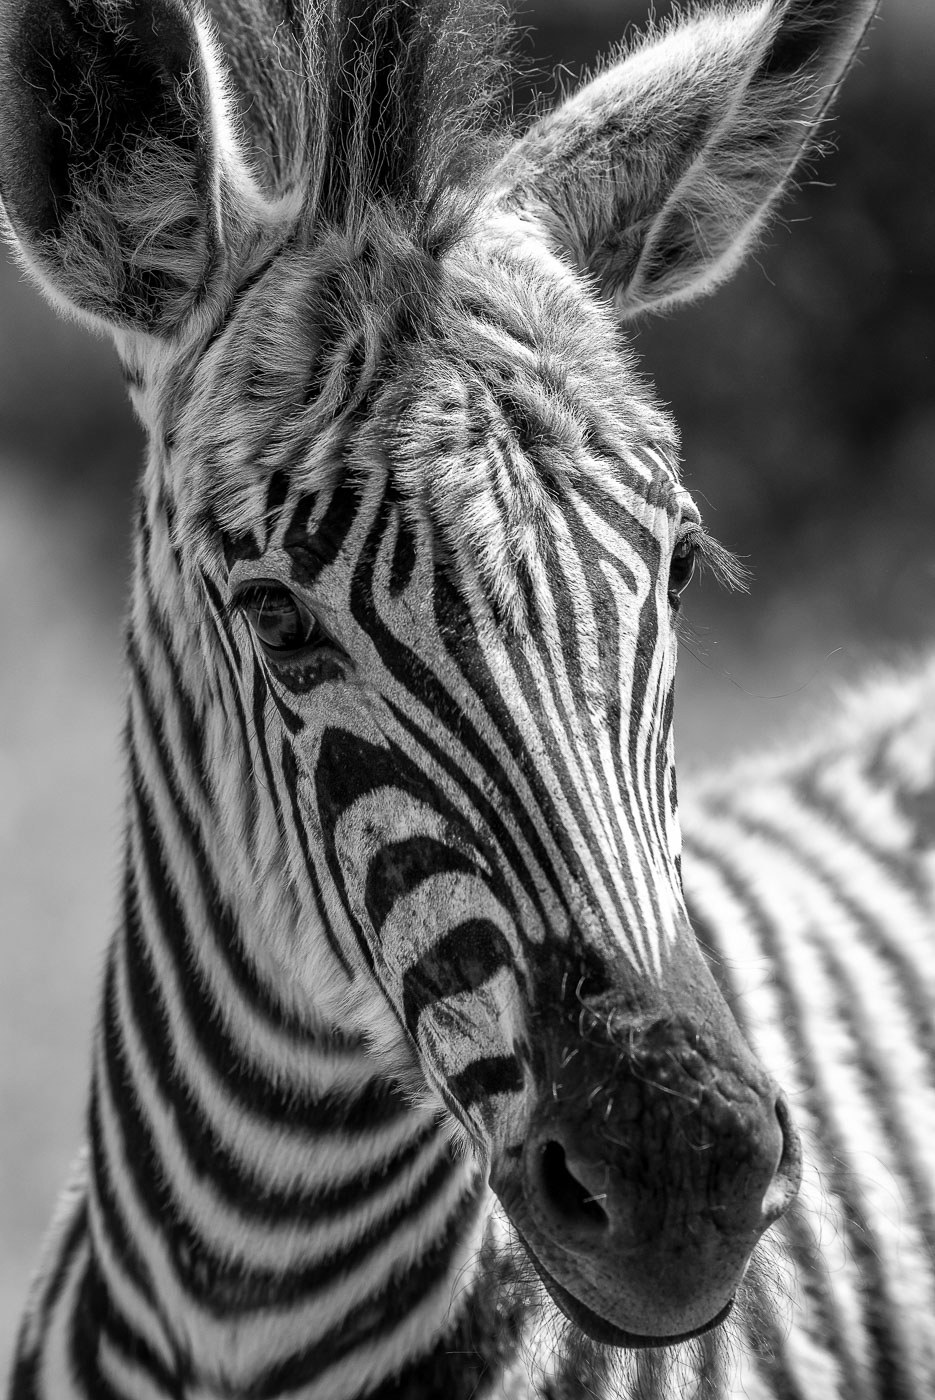 Junges Zebra